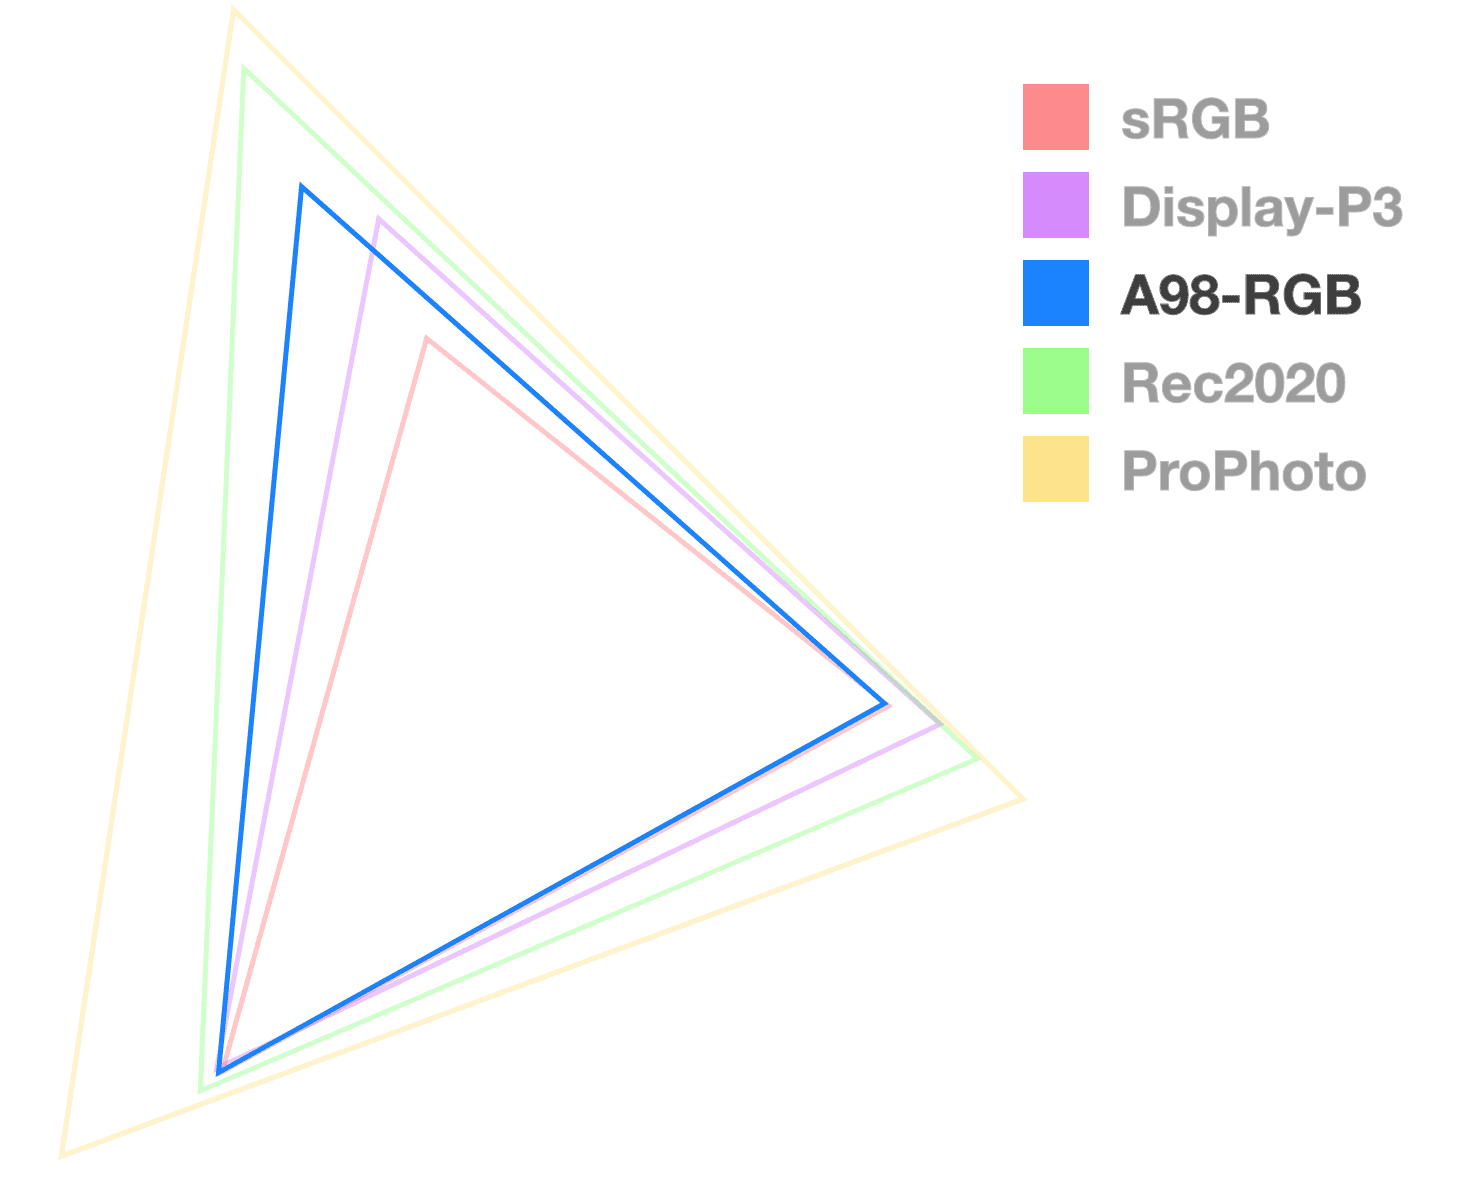 A98 三角形是唯一不透明的三角形，有助於以視覺化方式呈現星體大小。它看起來是中間大小的三角形。